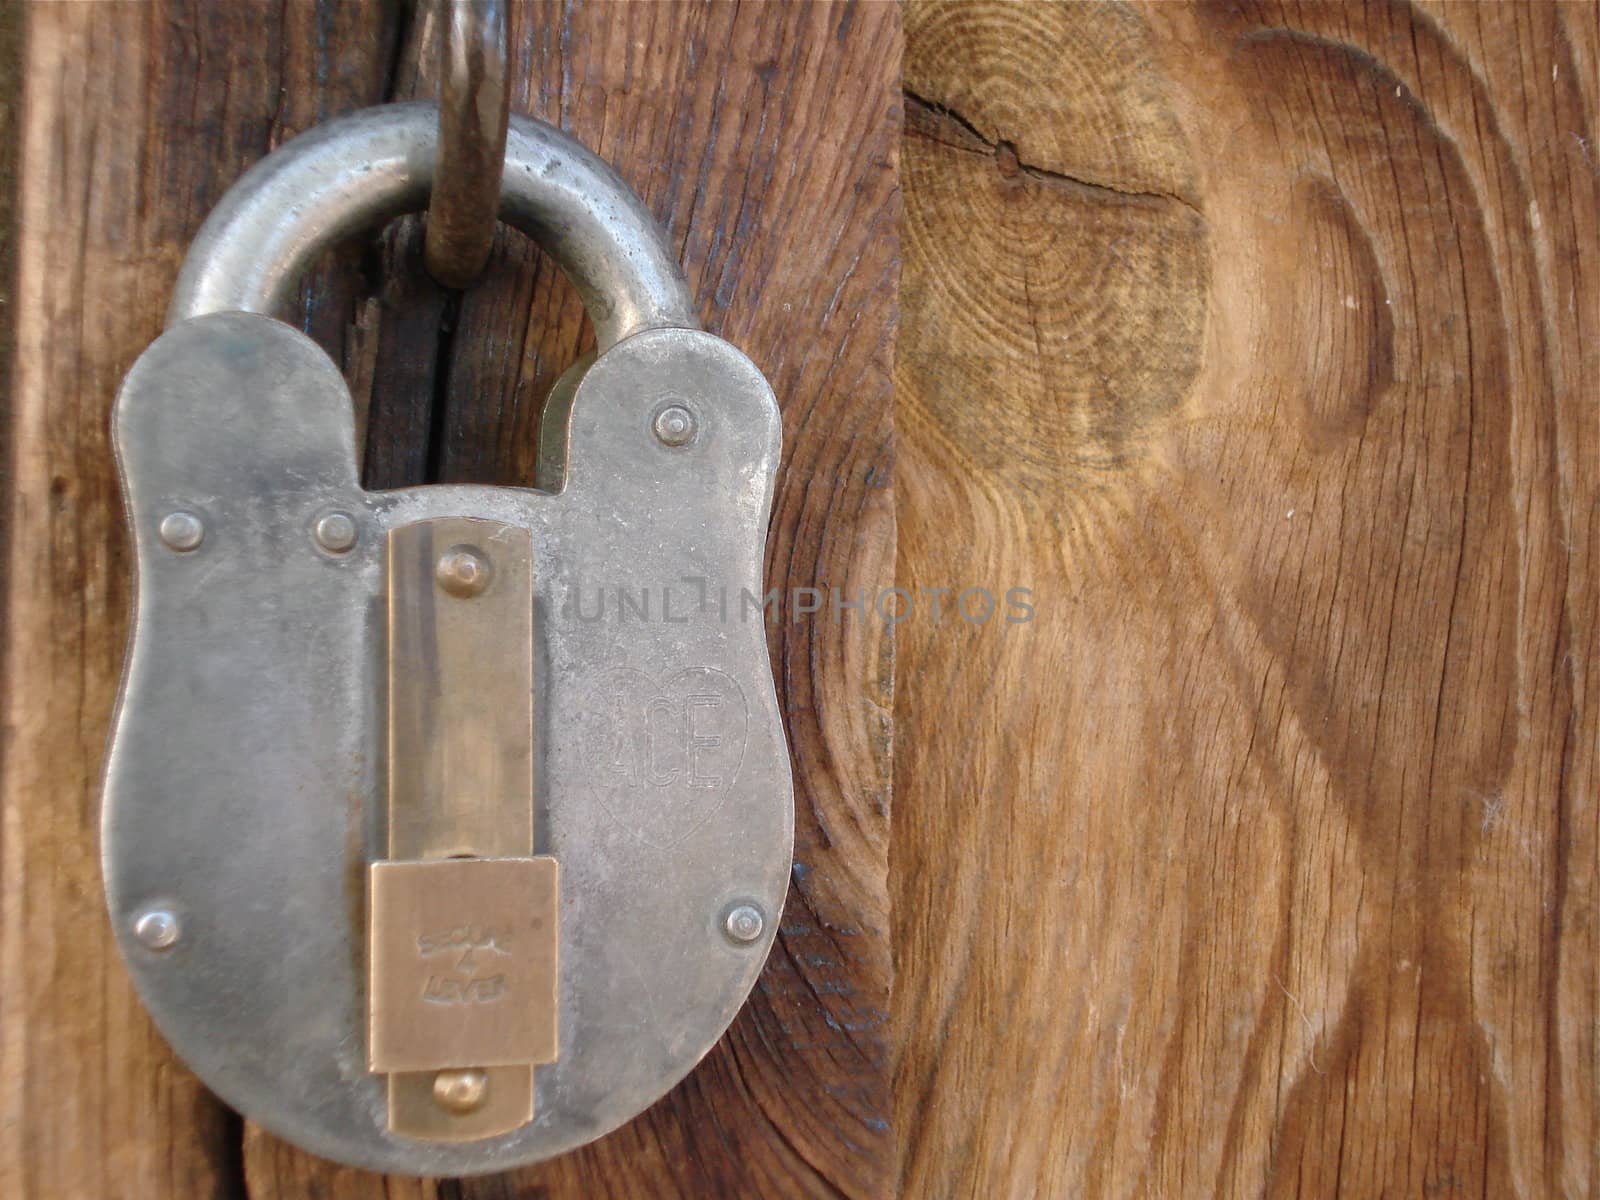 A metal lock hangs on an old barn door.